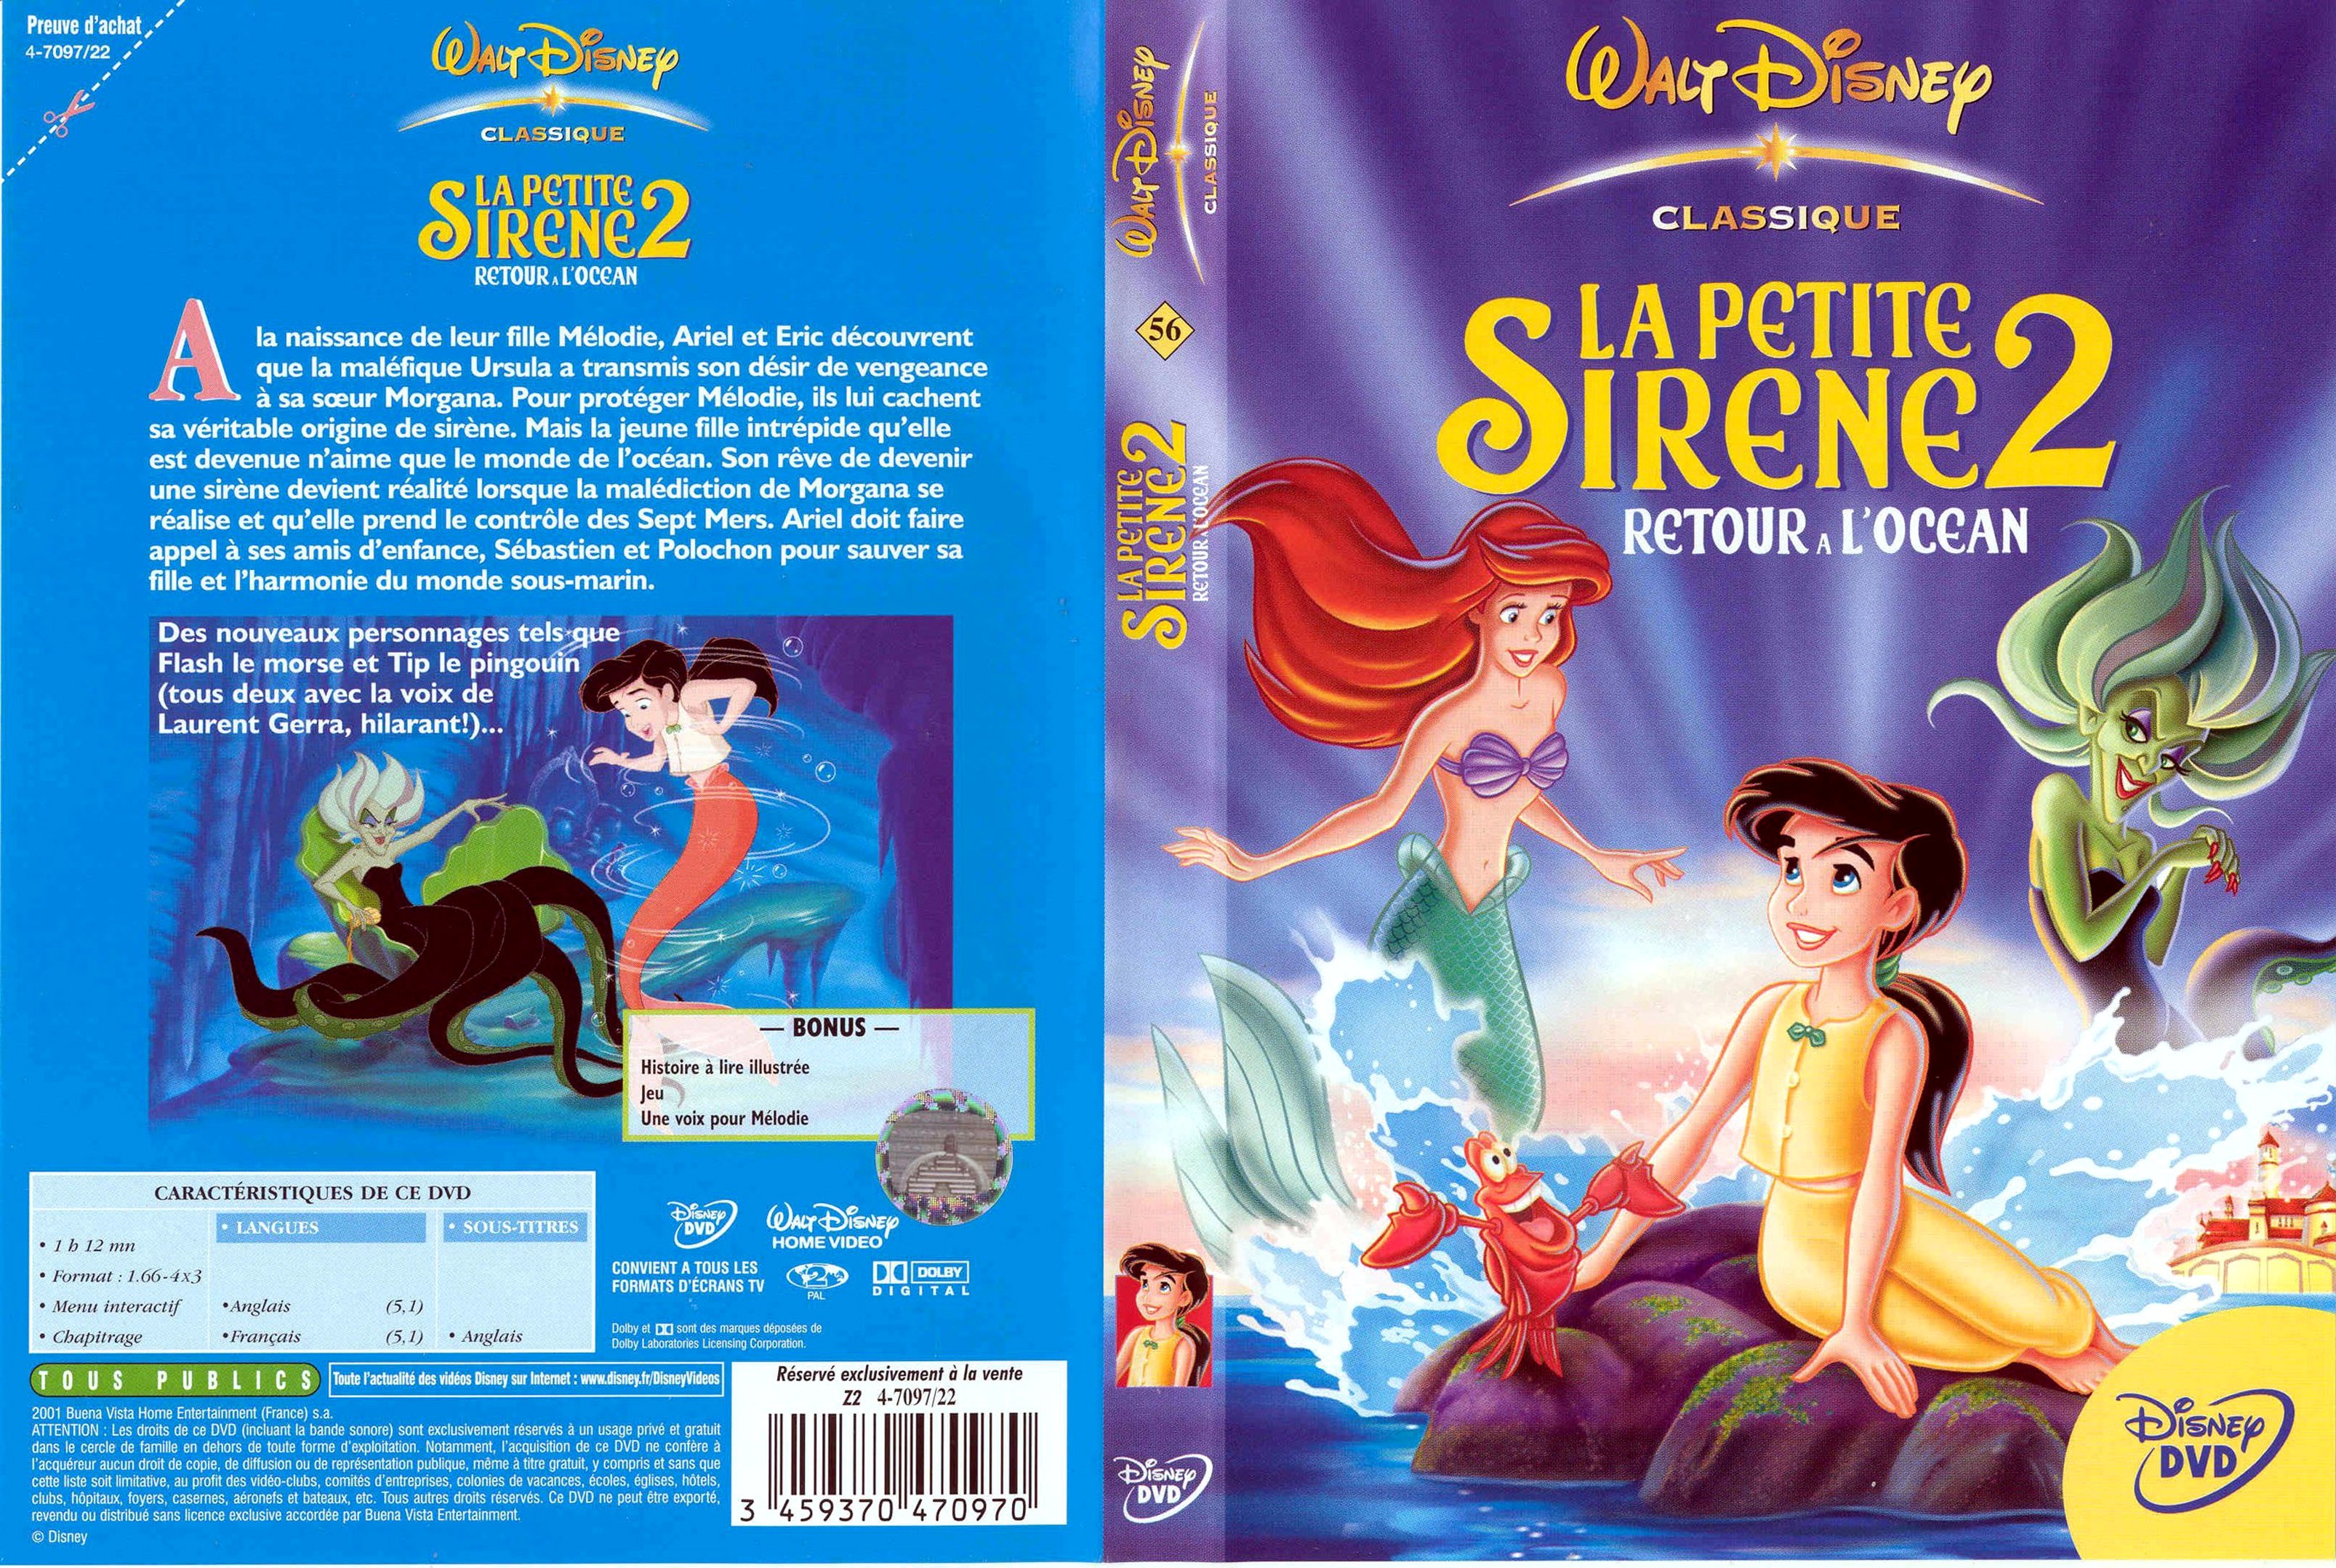 Jaquette DVD La petite sirene 2